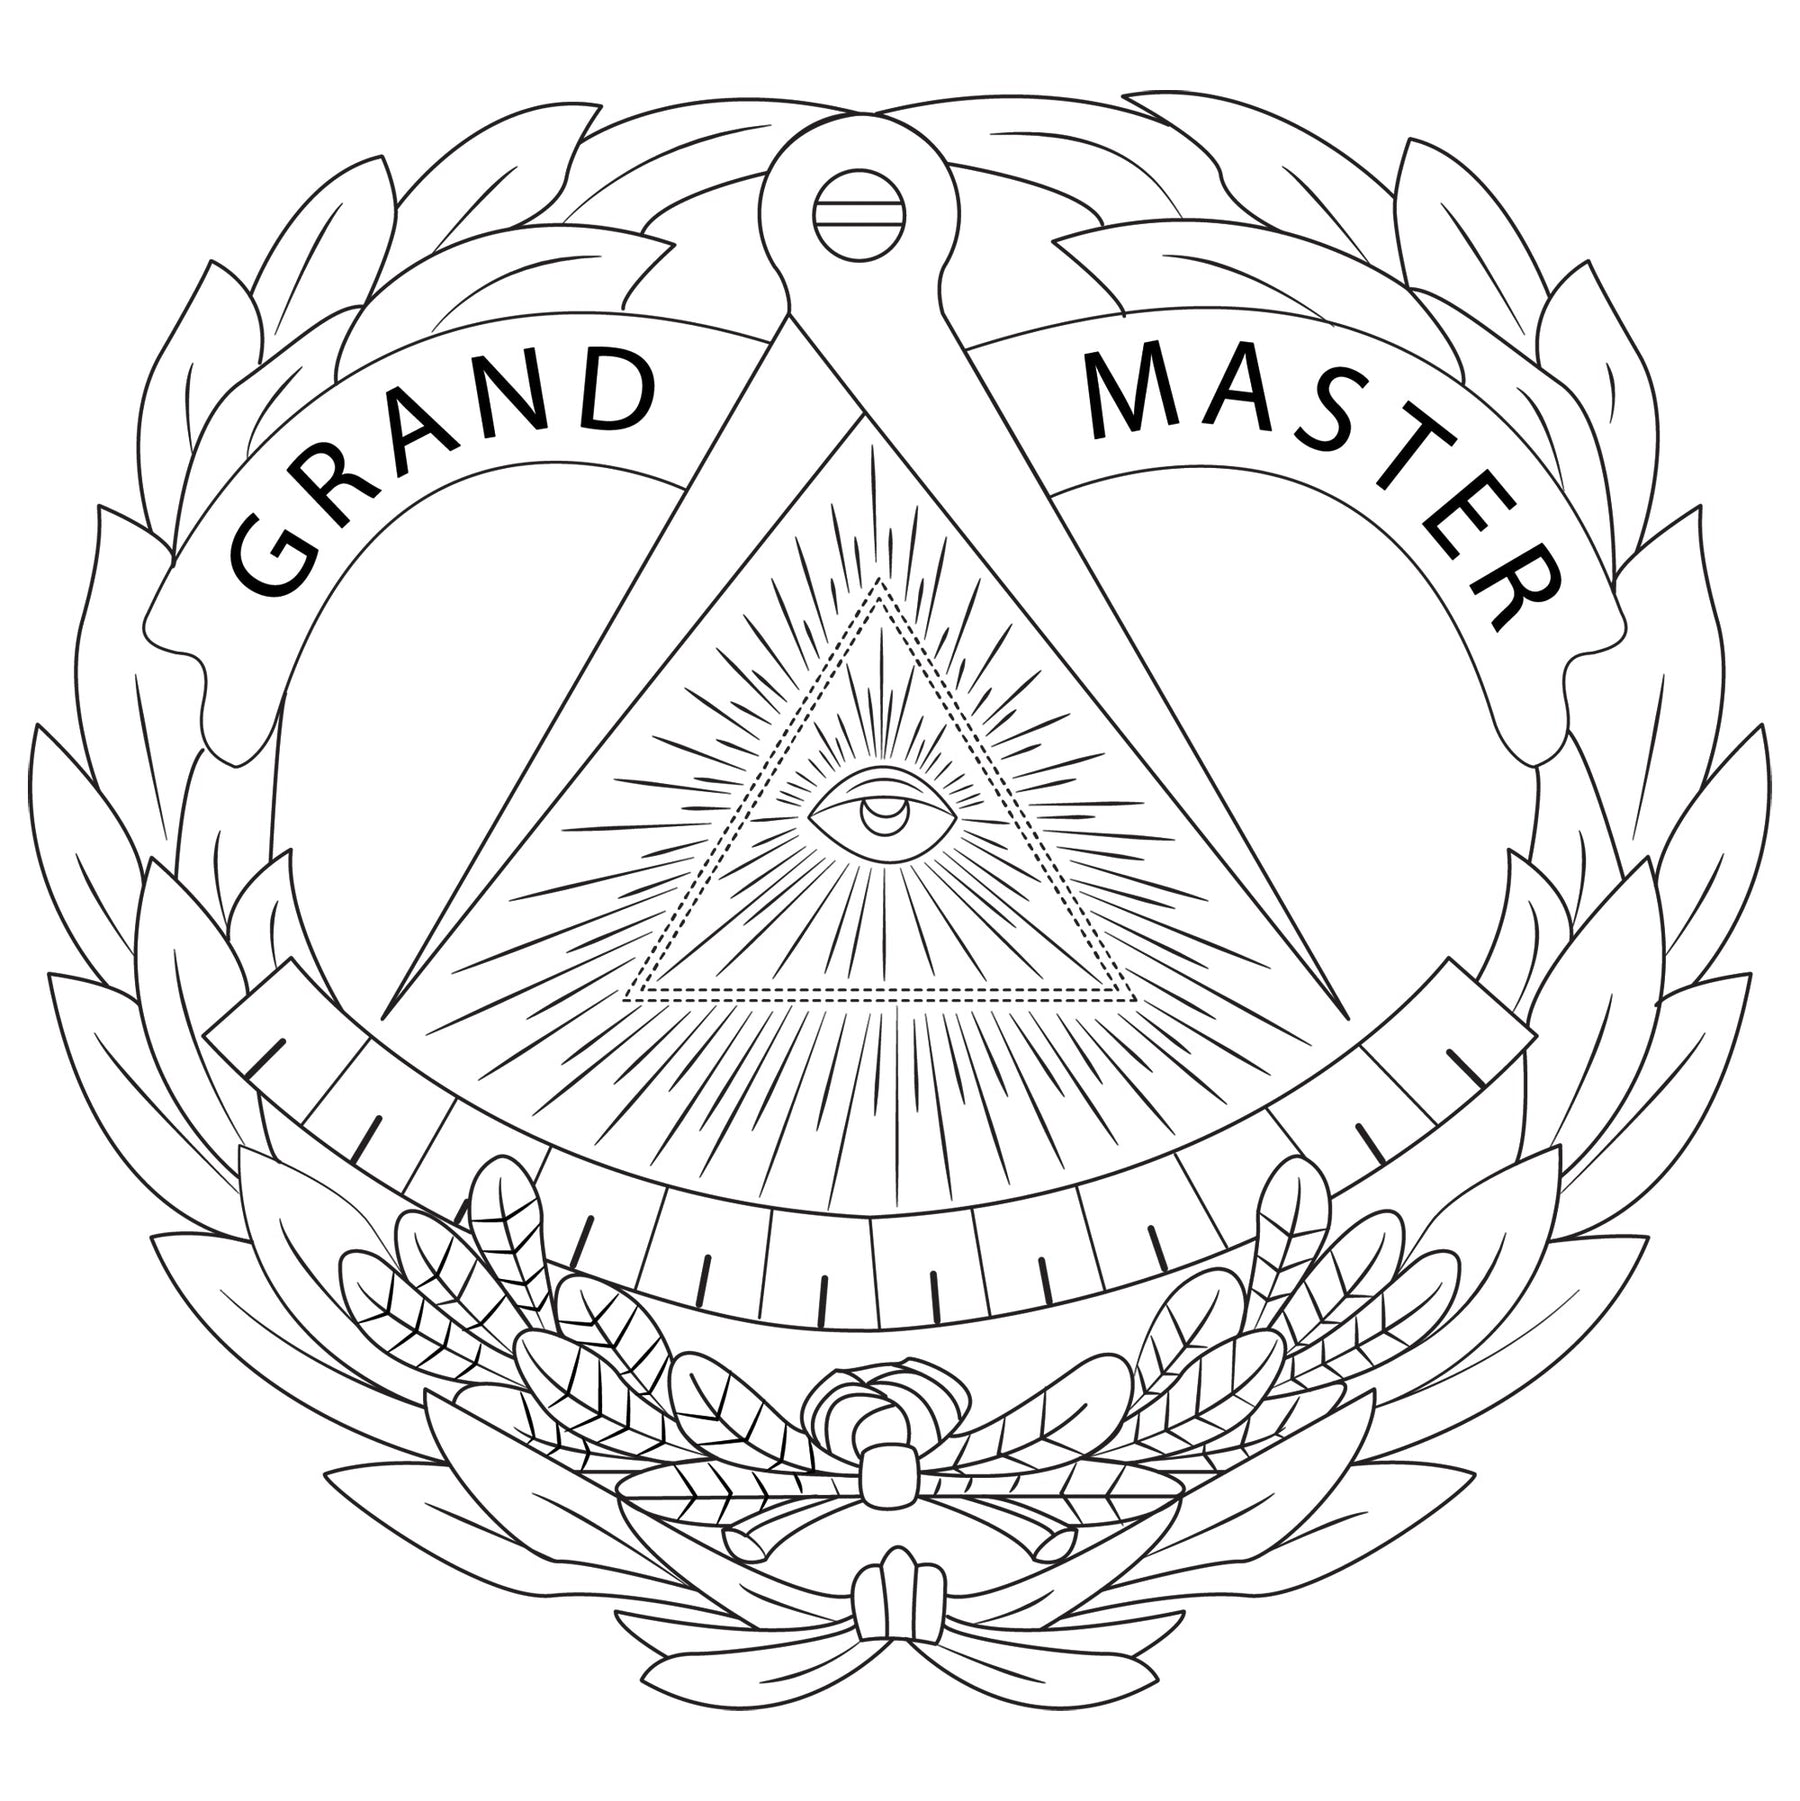 Grand Master Blue Lodge Chess Set - 15.7" (40cm) - Bricks Masons